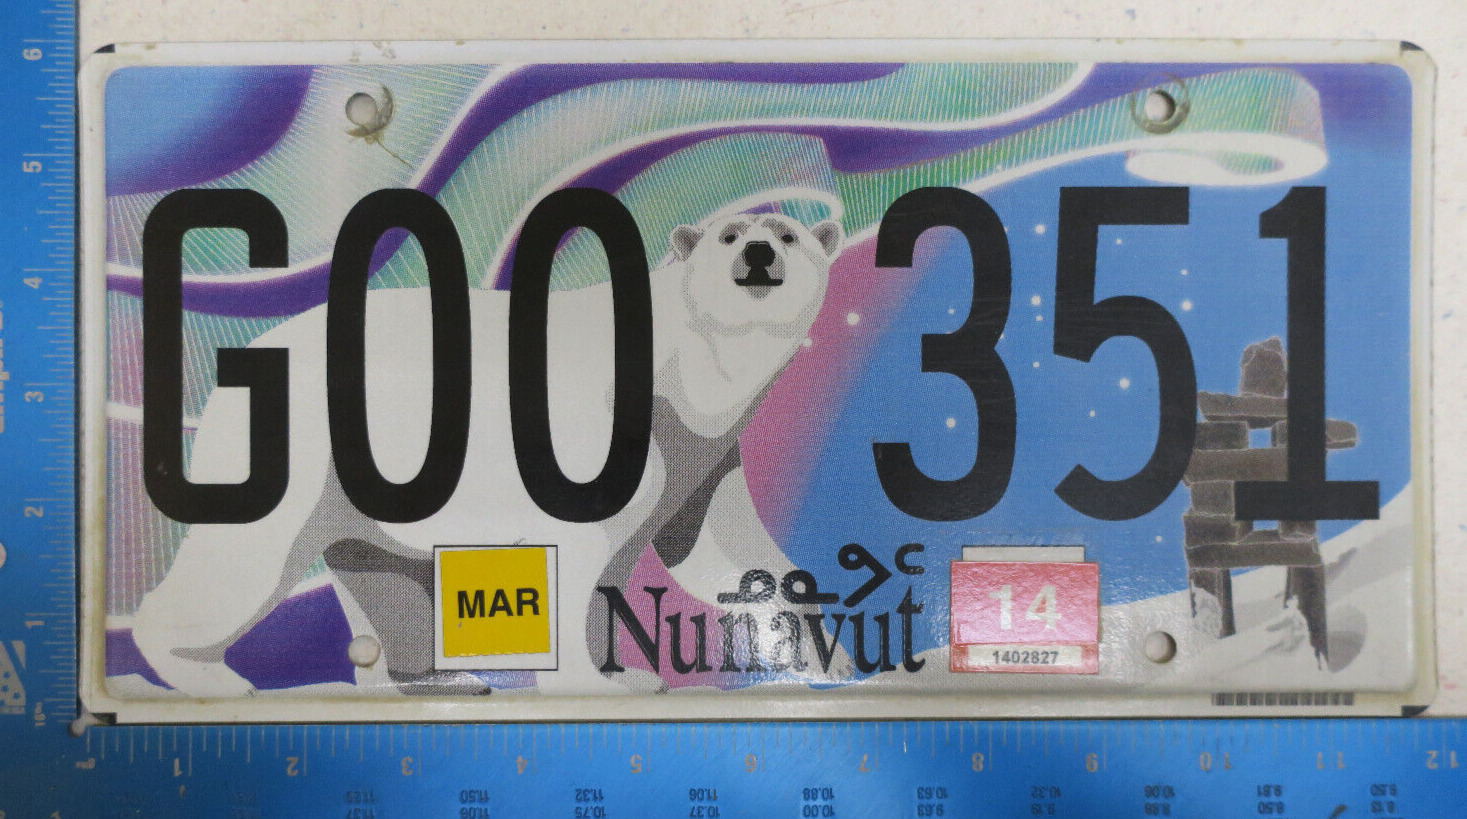 Nunavut License Plate 2014 Governmnet G Gov Graphic Bear Tag 14 G00351 351